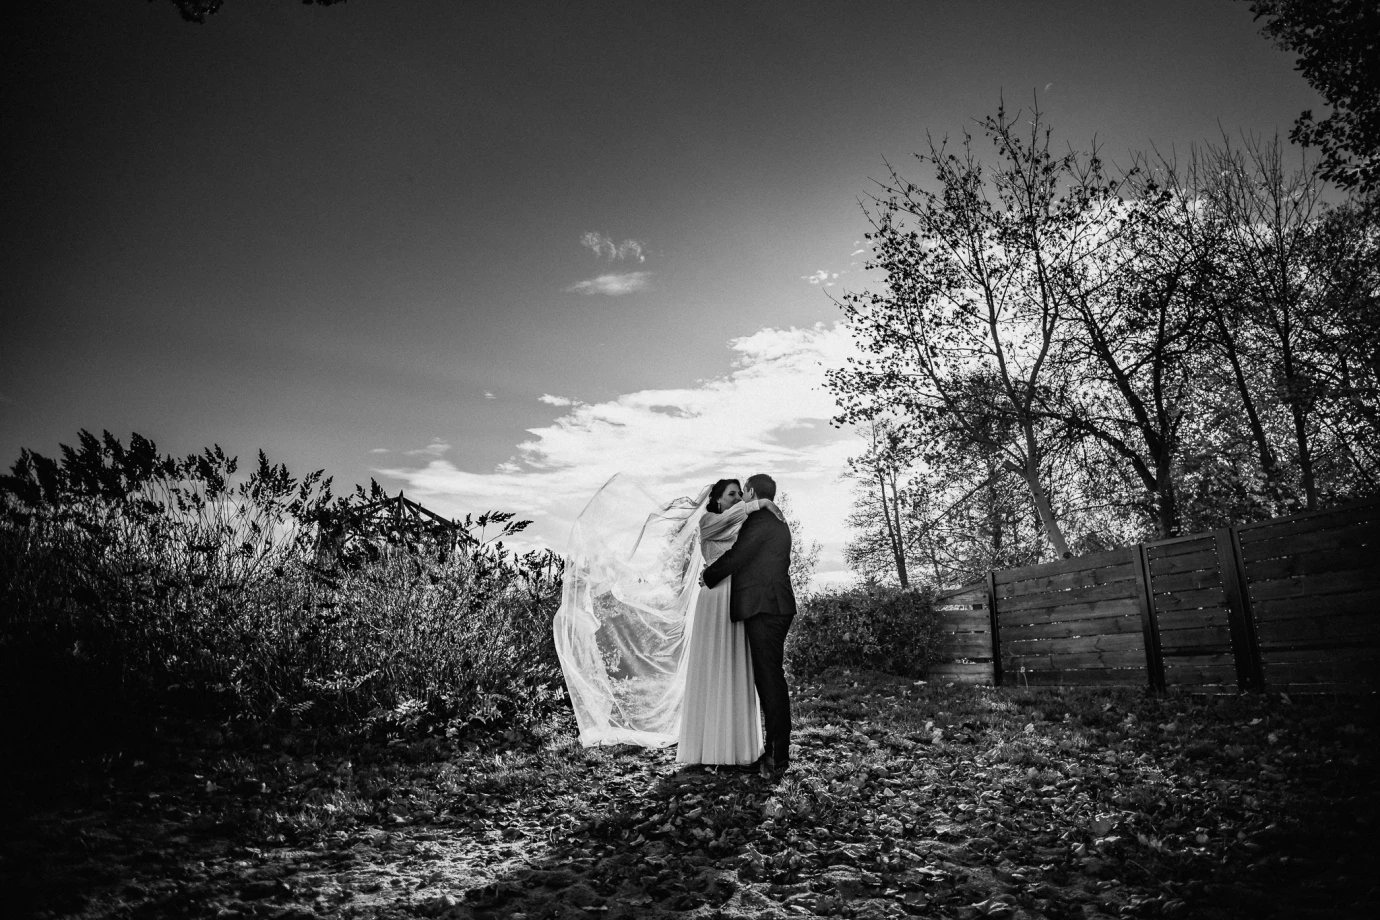 fotograf makow-mazowiecki kempastudio portfolio zdjecia slubne inspiracje wesele plener slubny sesja slubna